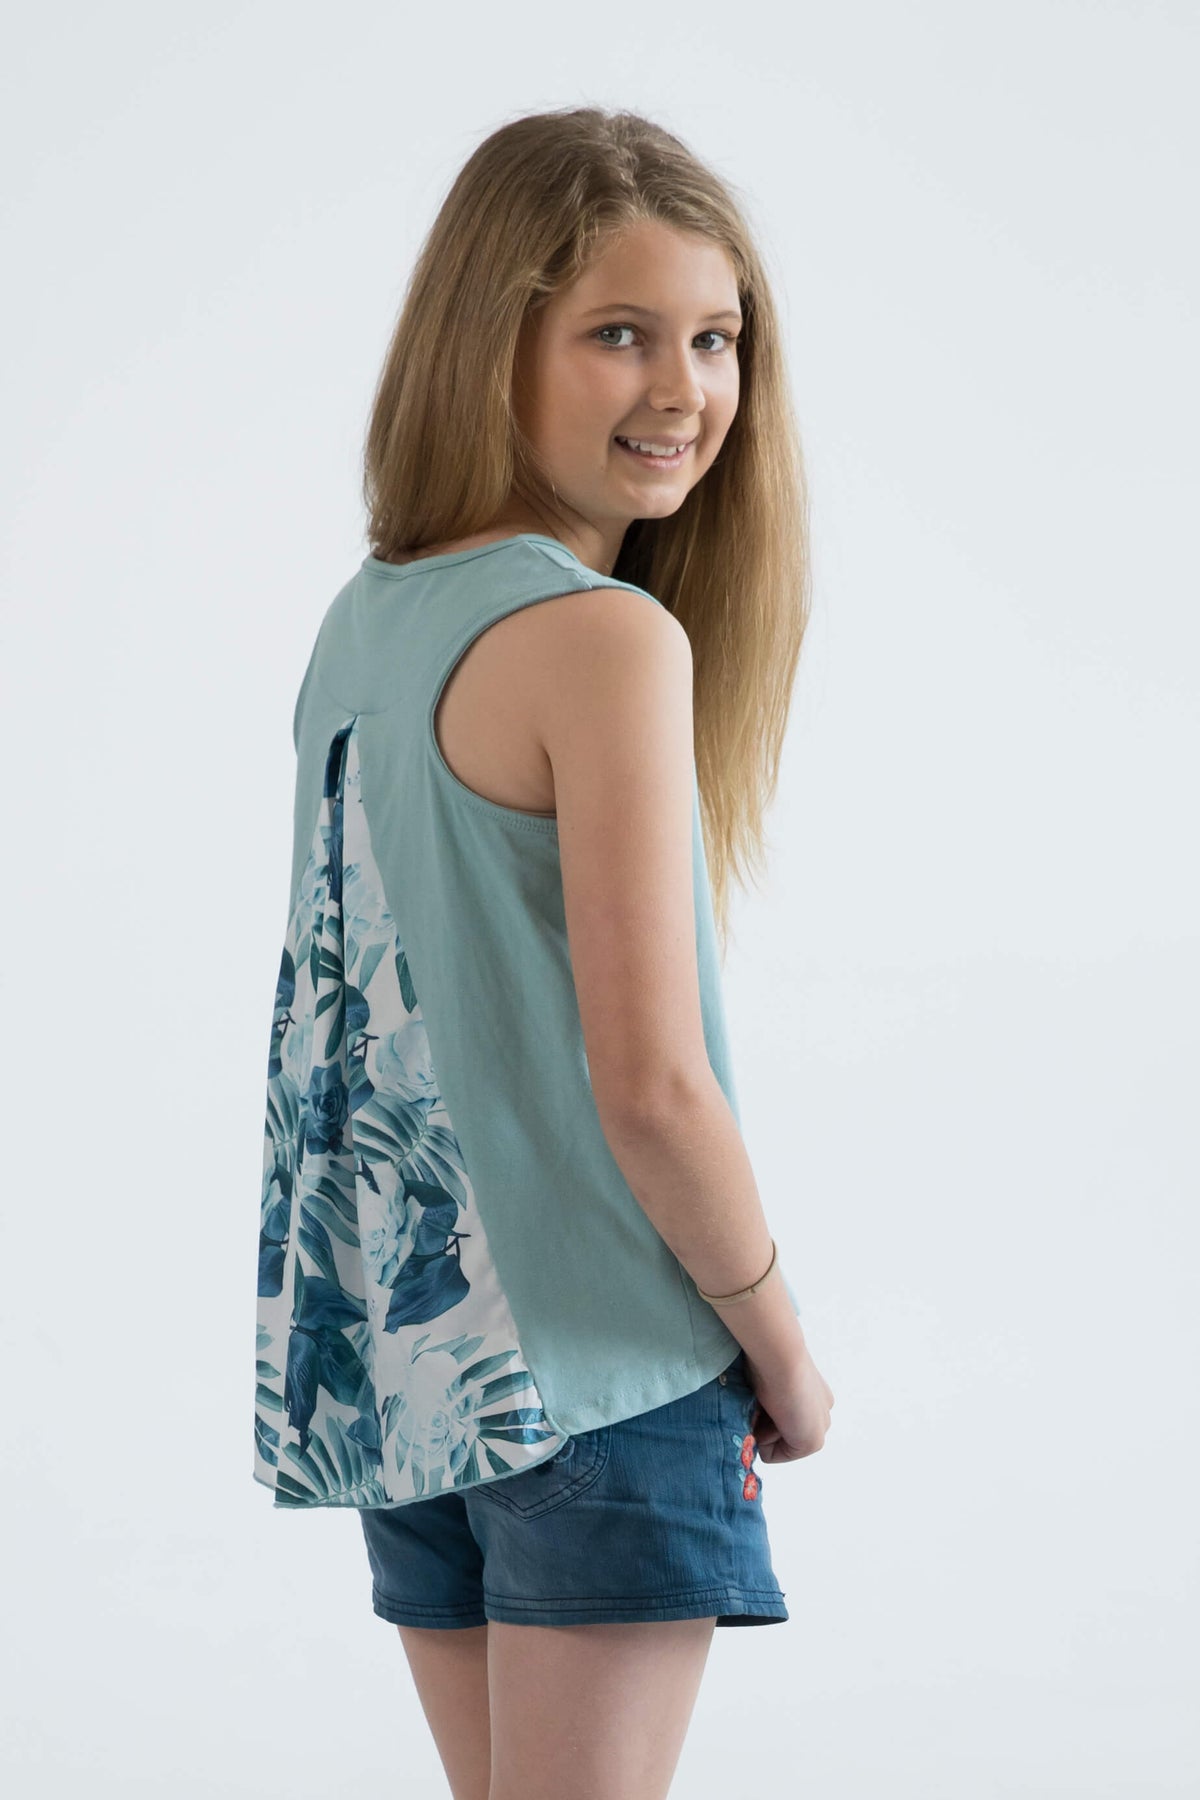 mint green teen girls clothing sleeveless singlet top floral print by Love Haidee Australia racer back